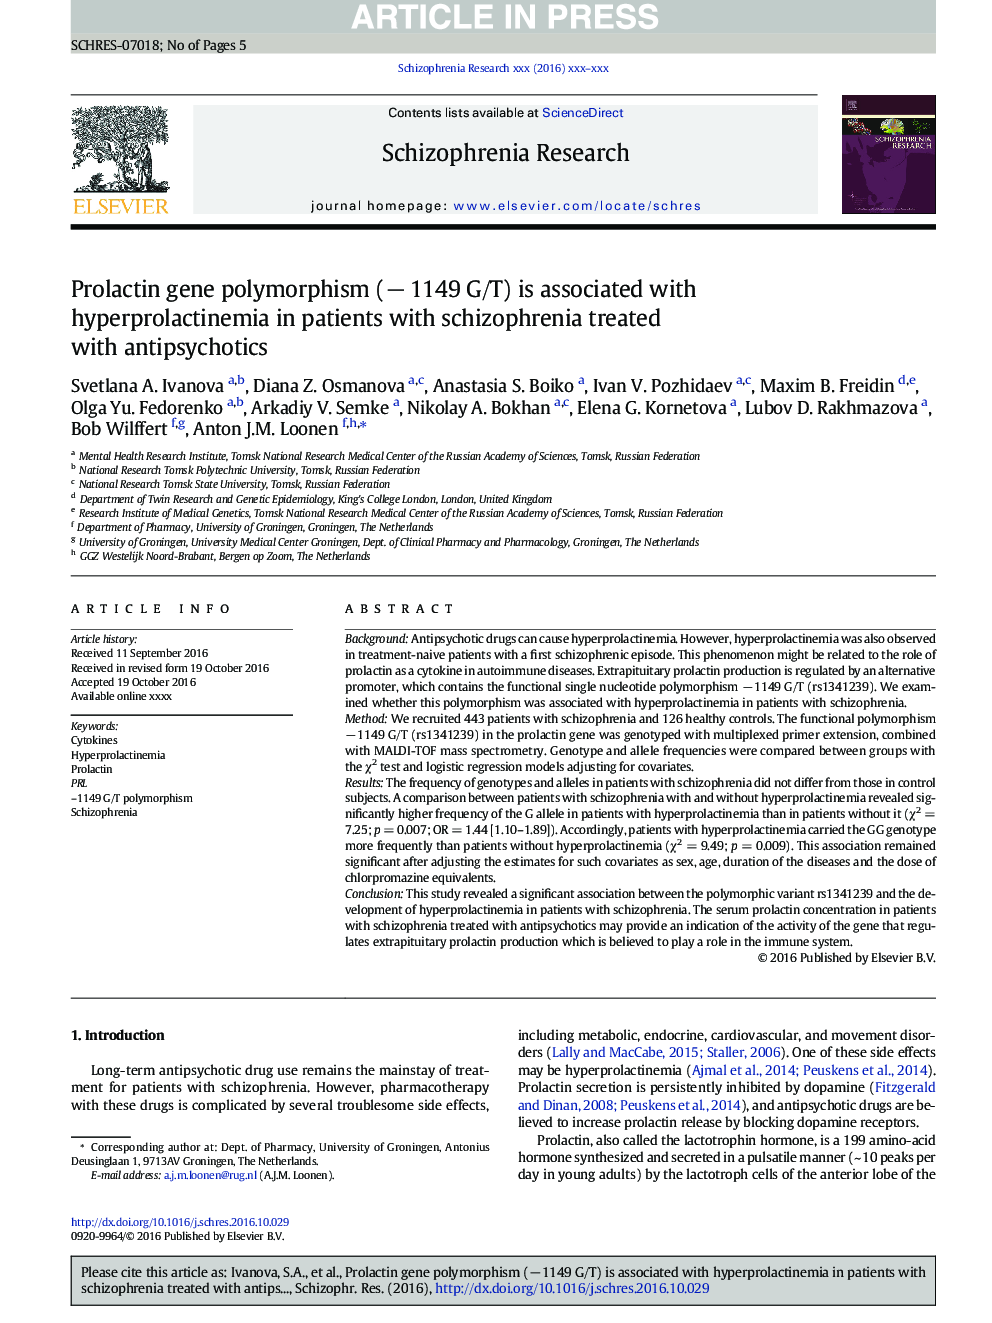 Prolactin gene polymorphism (âÂ 1149 G/T) is associated with hyperprolactinemia in patients with schizophrenia treated with antipsychotics